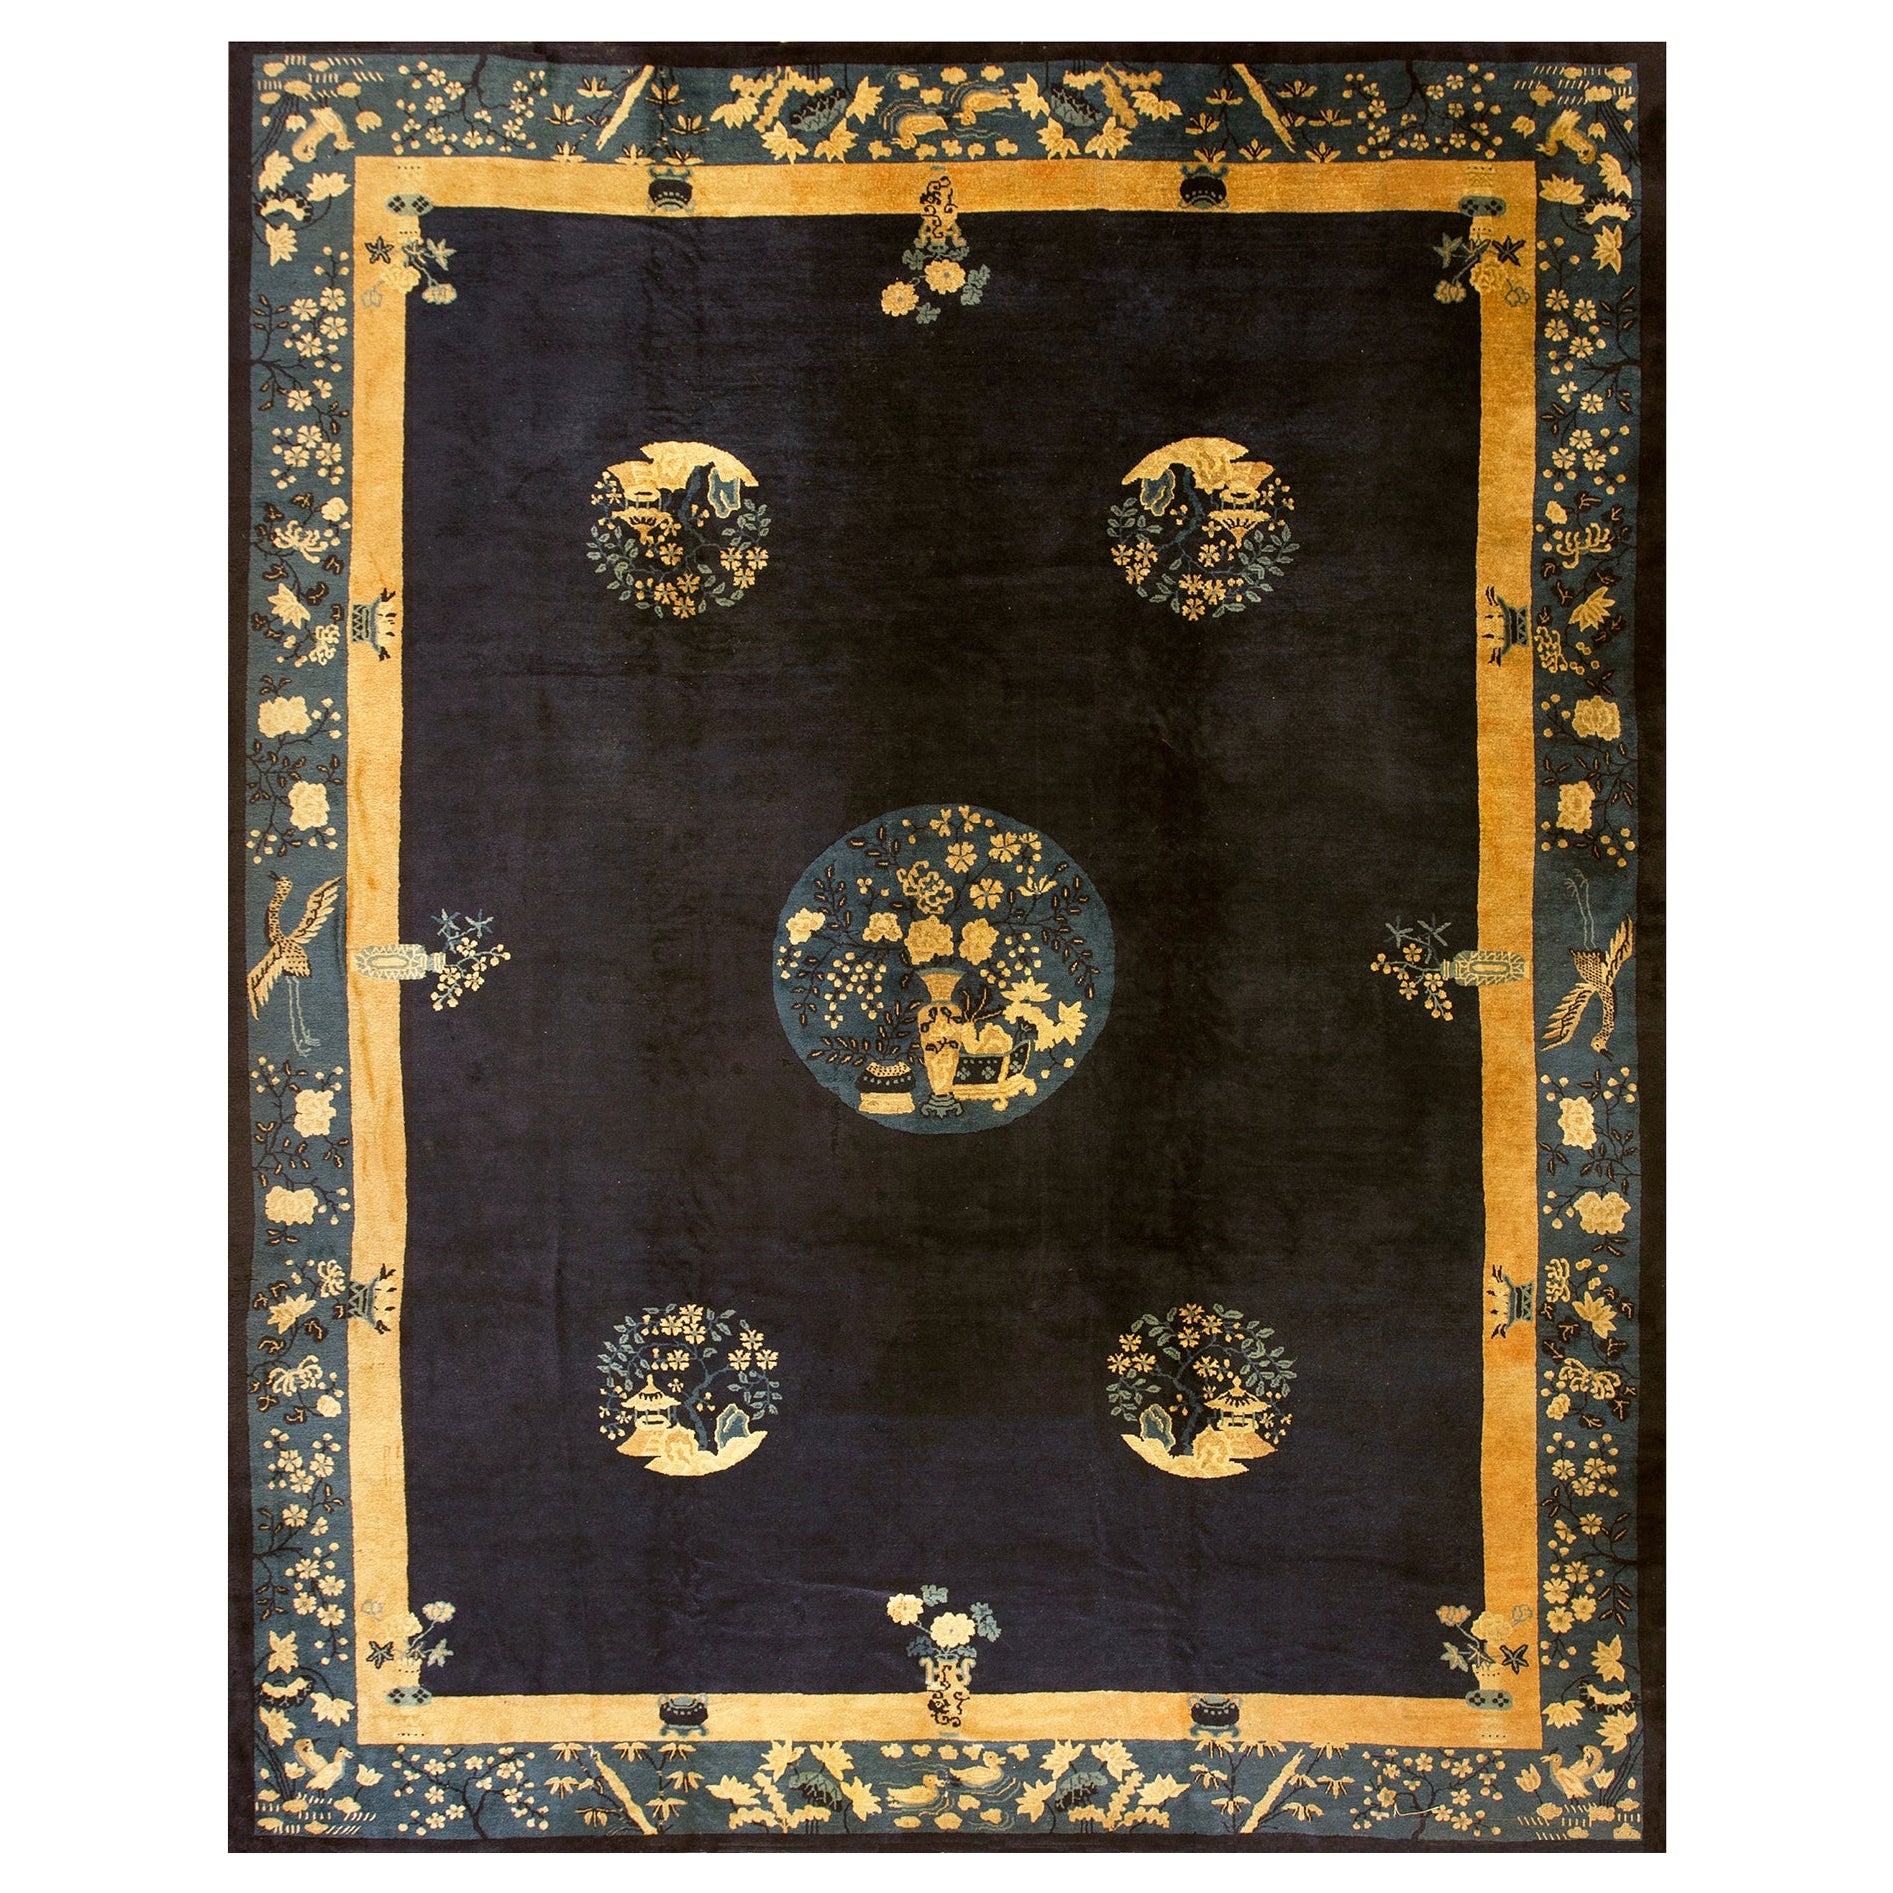 Early 20th Century Chinese Peking Carpet ( 10' x 12' 6" - 305 x 382 )